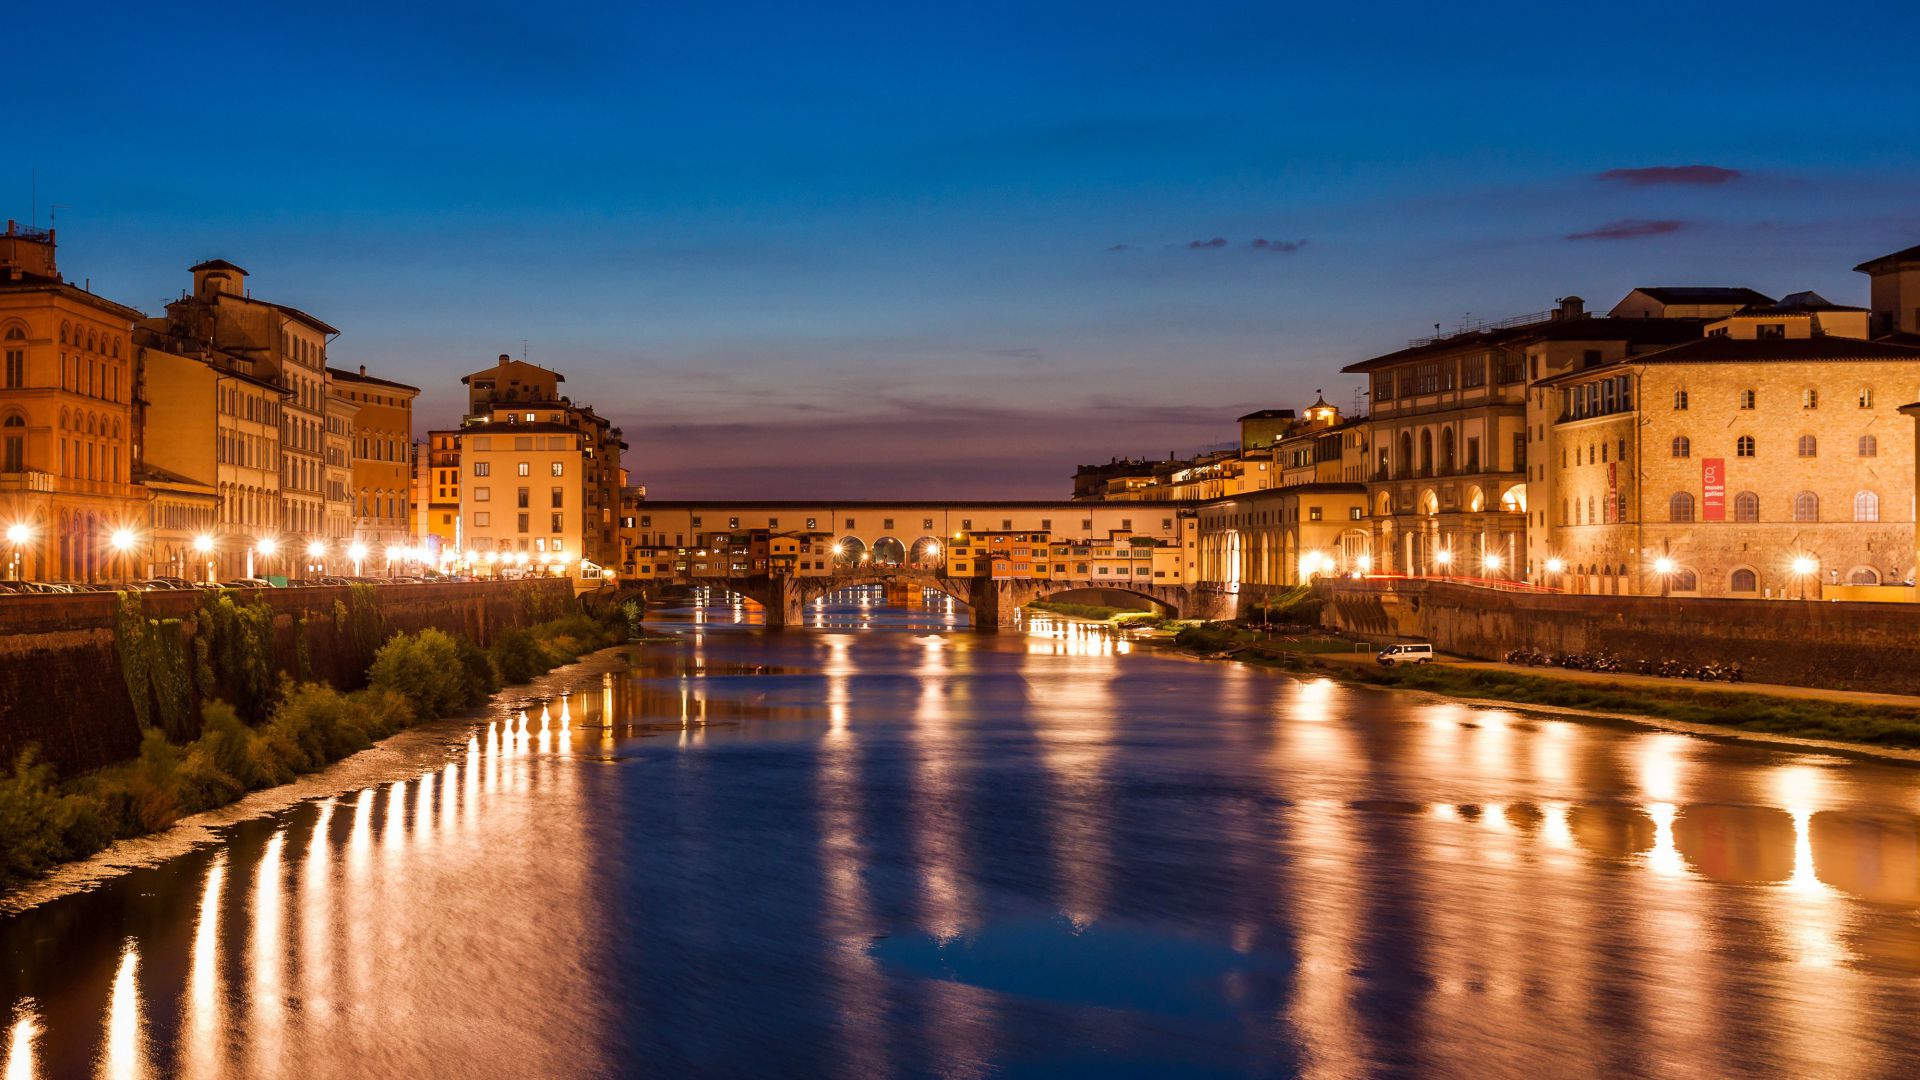 Флоренция, Италия, Ночь, Туризм, путешествие, Florence, Italy, Night, Tourism, Travel (horizontal)